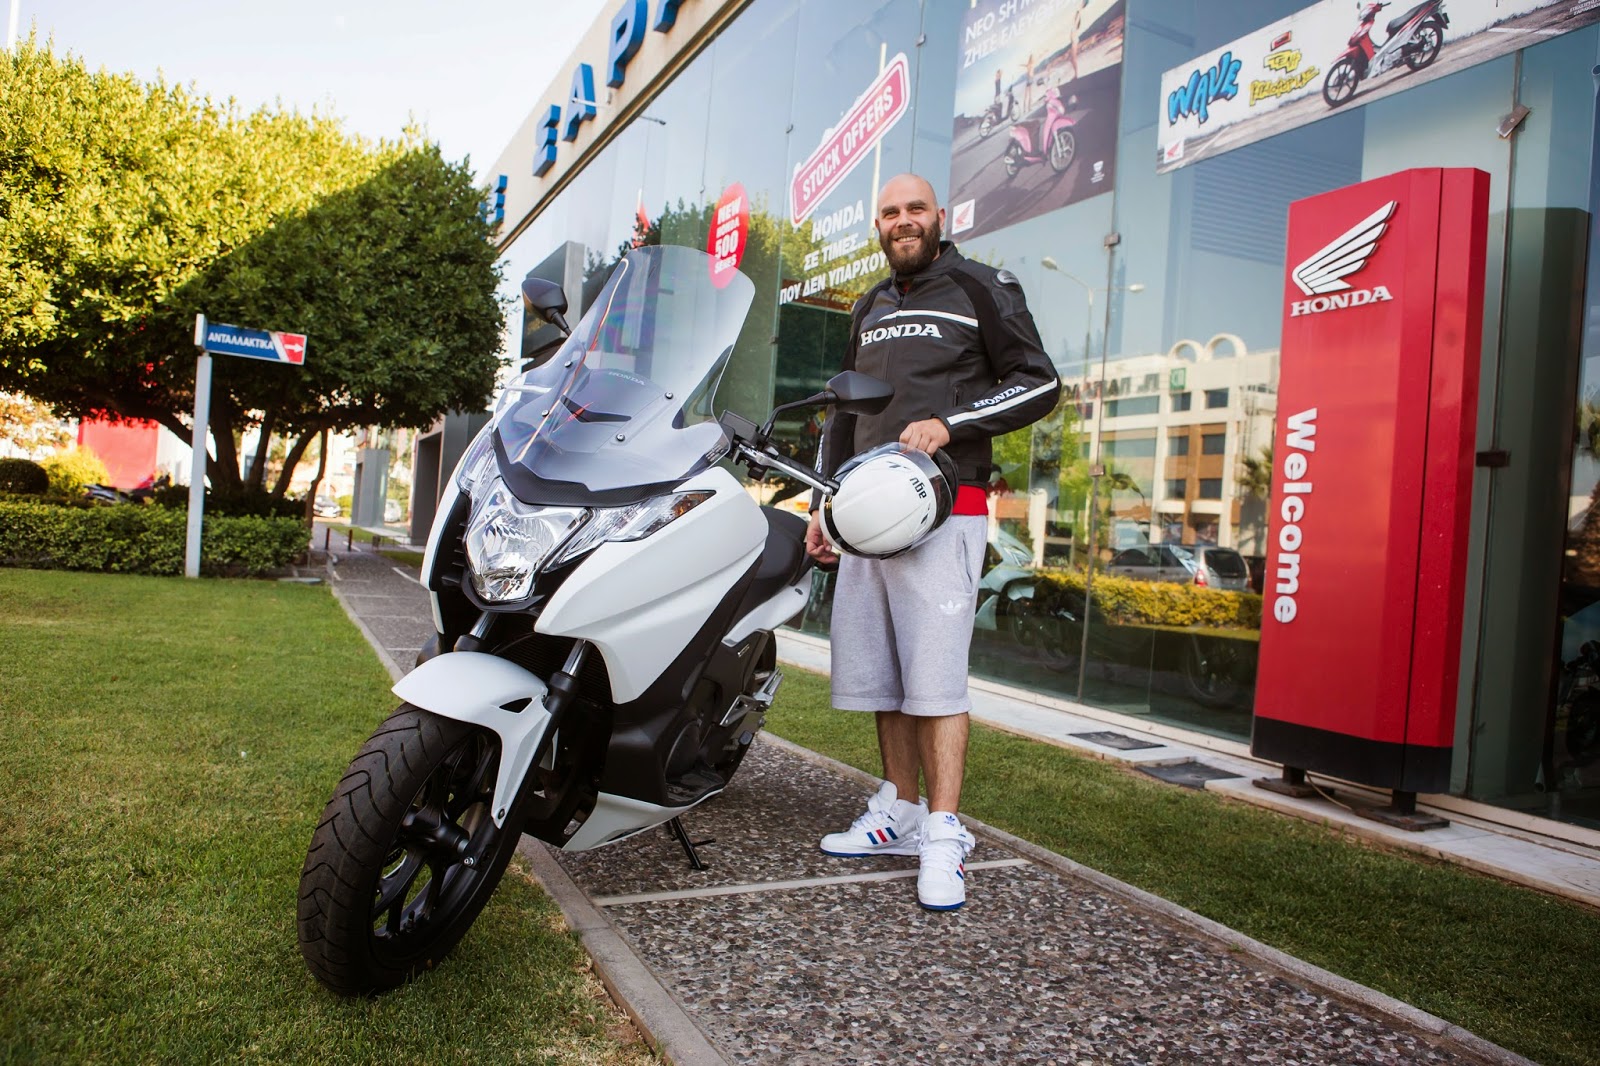 O Μιχάλης Stavento επιλέγει Honda Scooter για τις καθημερινές μετακινήσεις του - Φωτογραφία 2